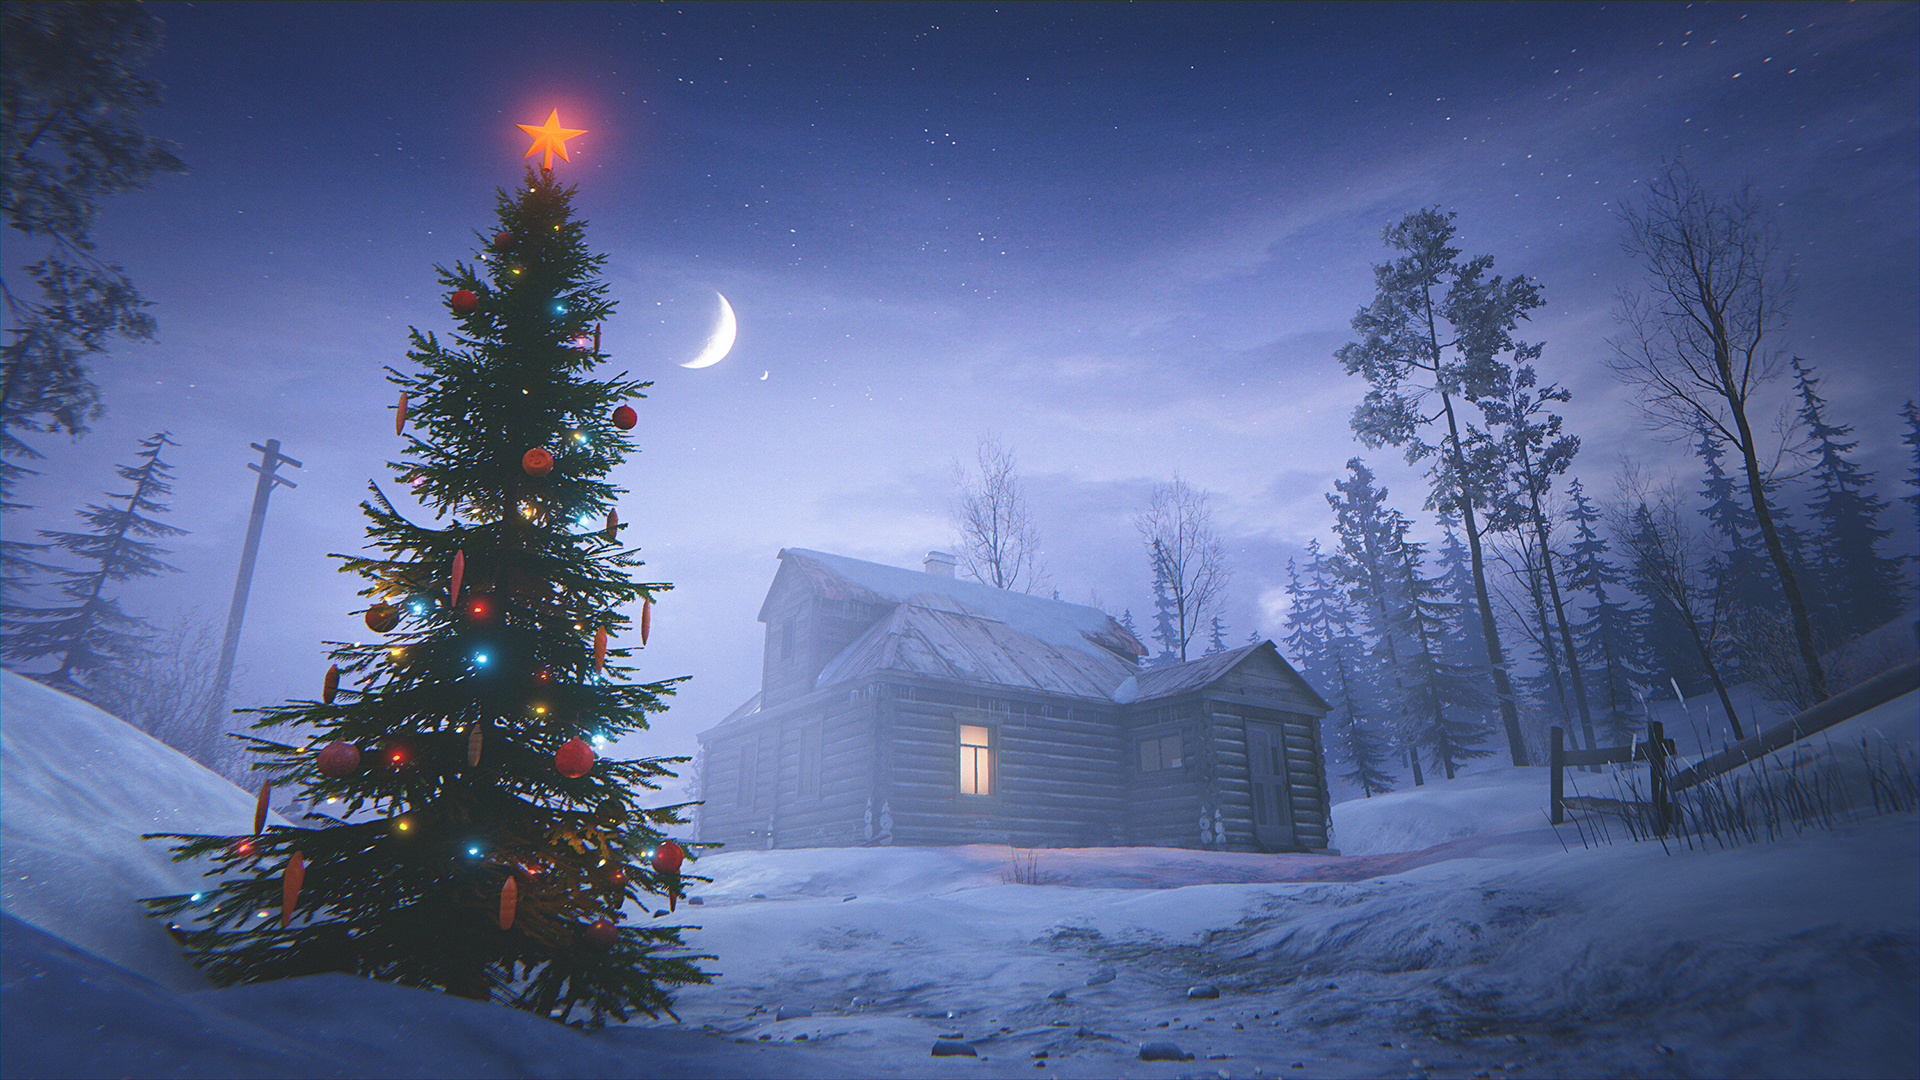 General 1920x1080 New Year Christmas tree 35MM snow Moon night stars house CGI